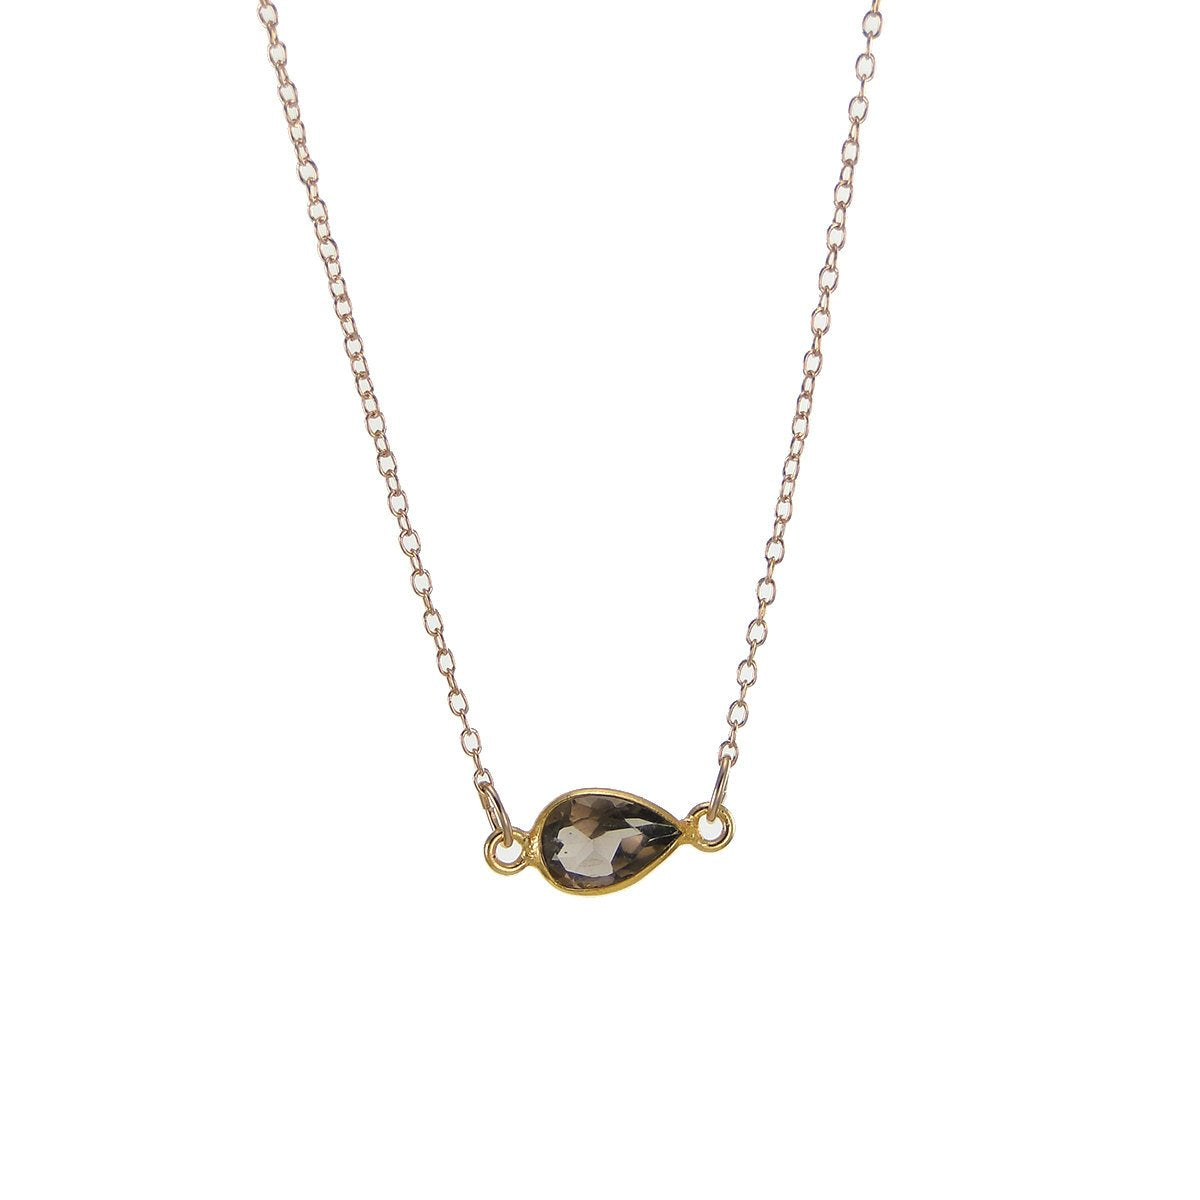 Smoky Quartz Delicate Gem Necklace - Tiny Stone Layered Necklace - Little Dainty 14K Gold Filled Necklace